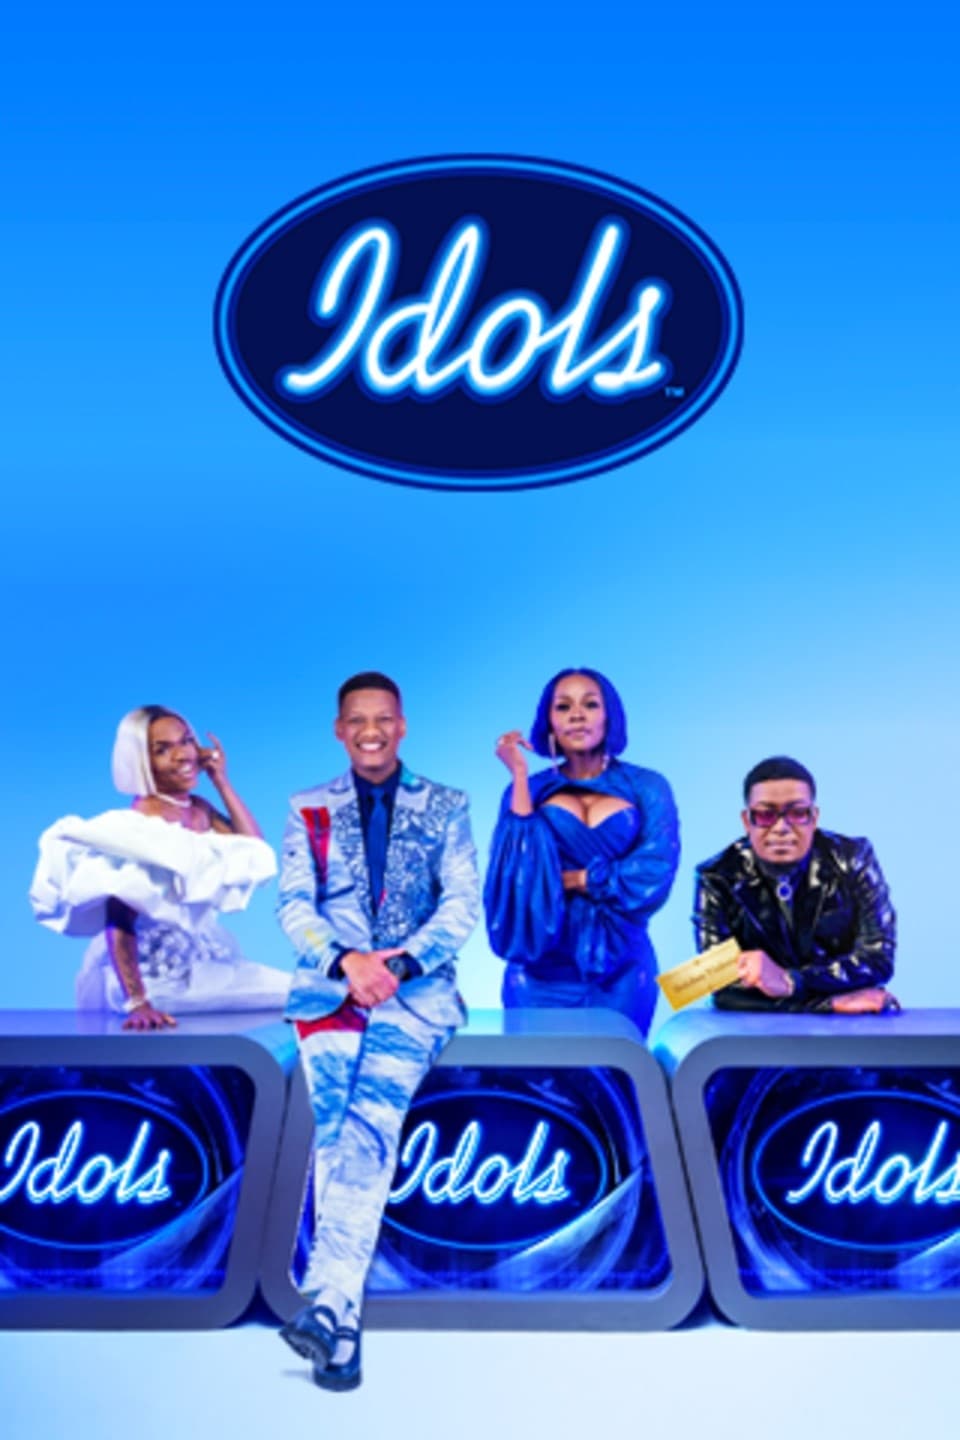 Idols (South Africa)